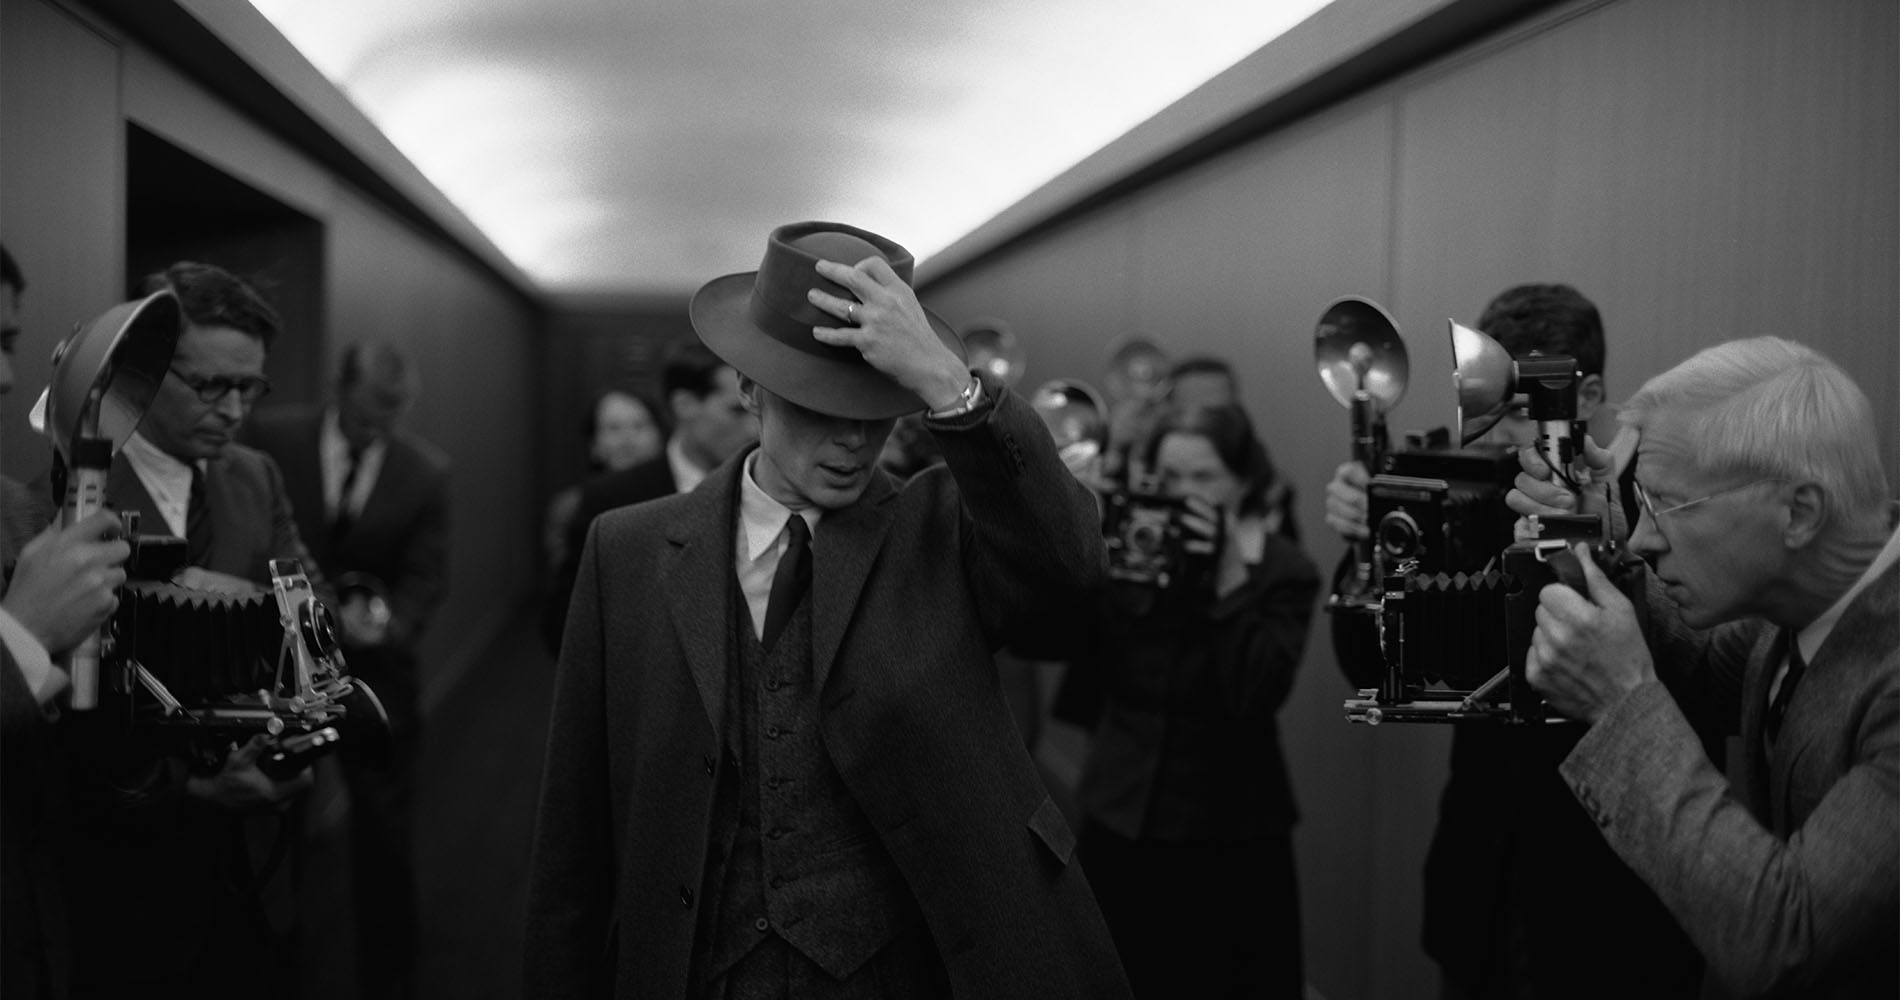 Cillian Murphy as J. Robert Oppenheimer in a brimmed hat and well-cut suit